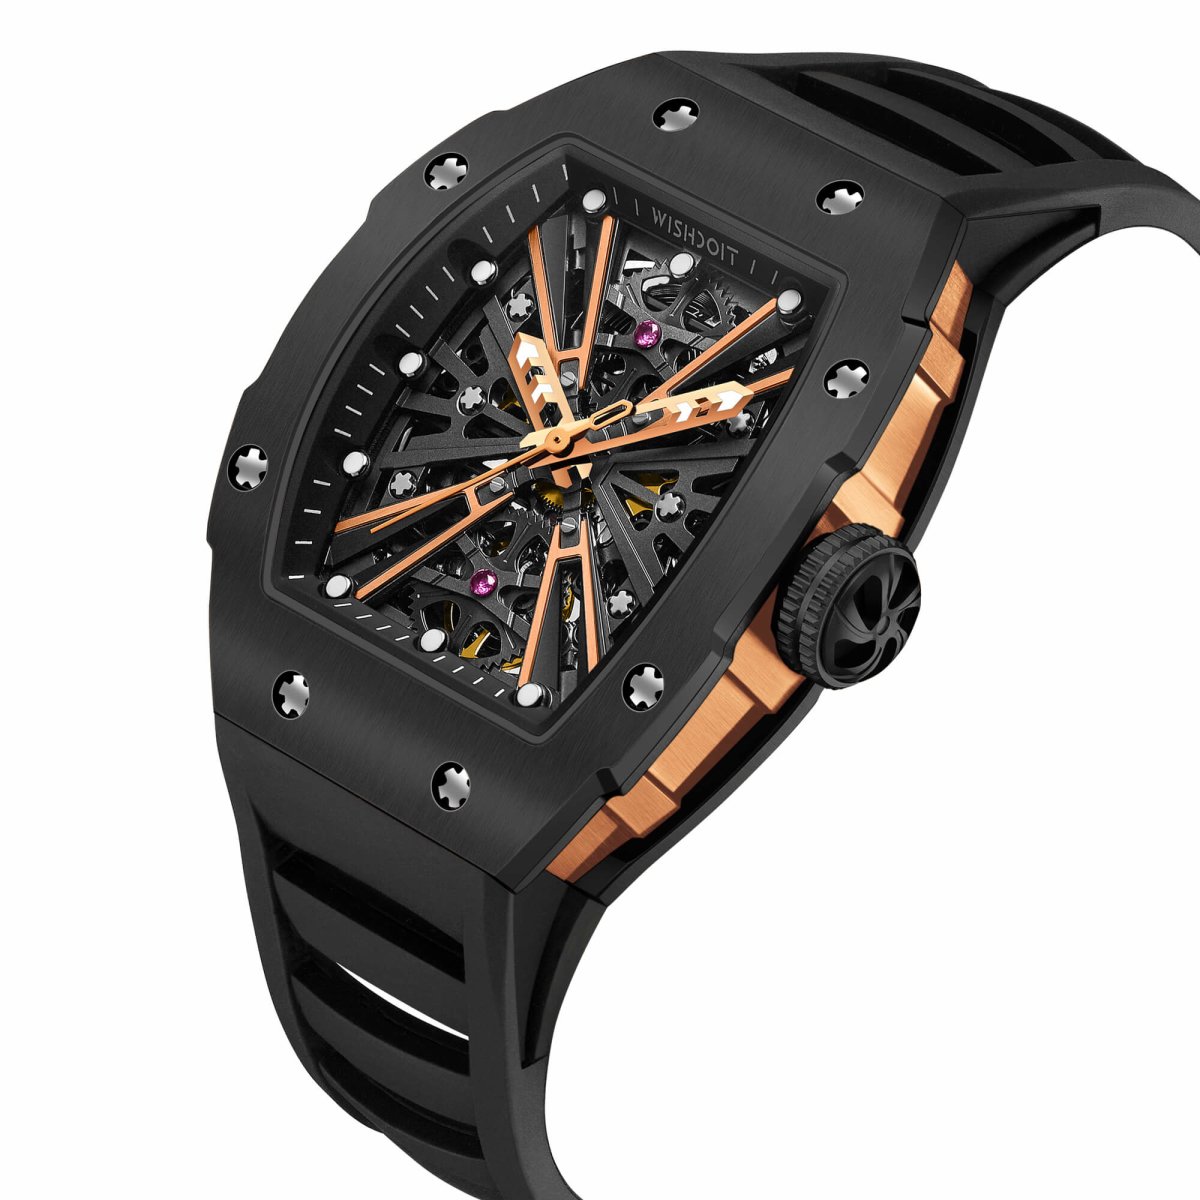 The X-series Tonneau Mechanical Watches For Men - Black | Wishdoit Watches